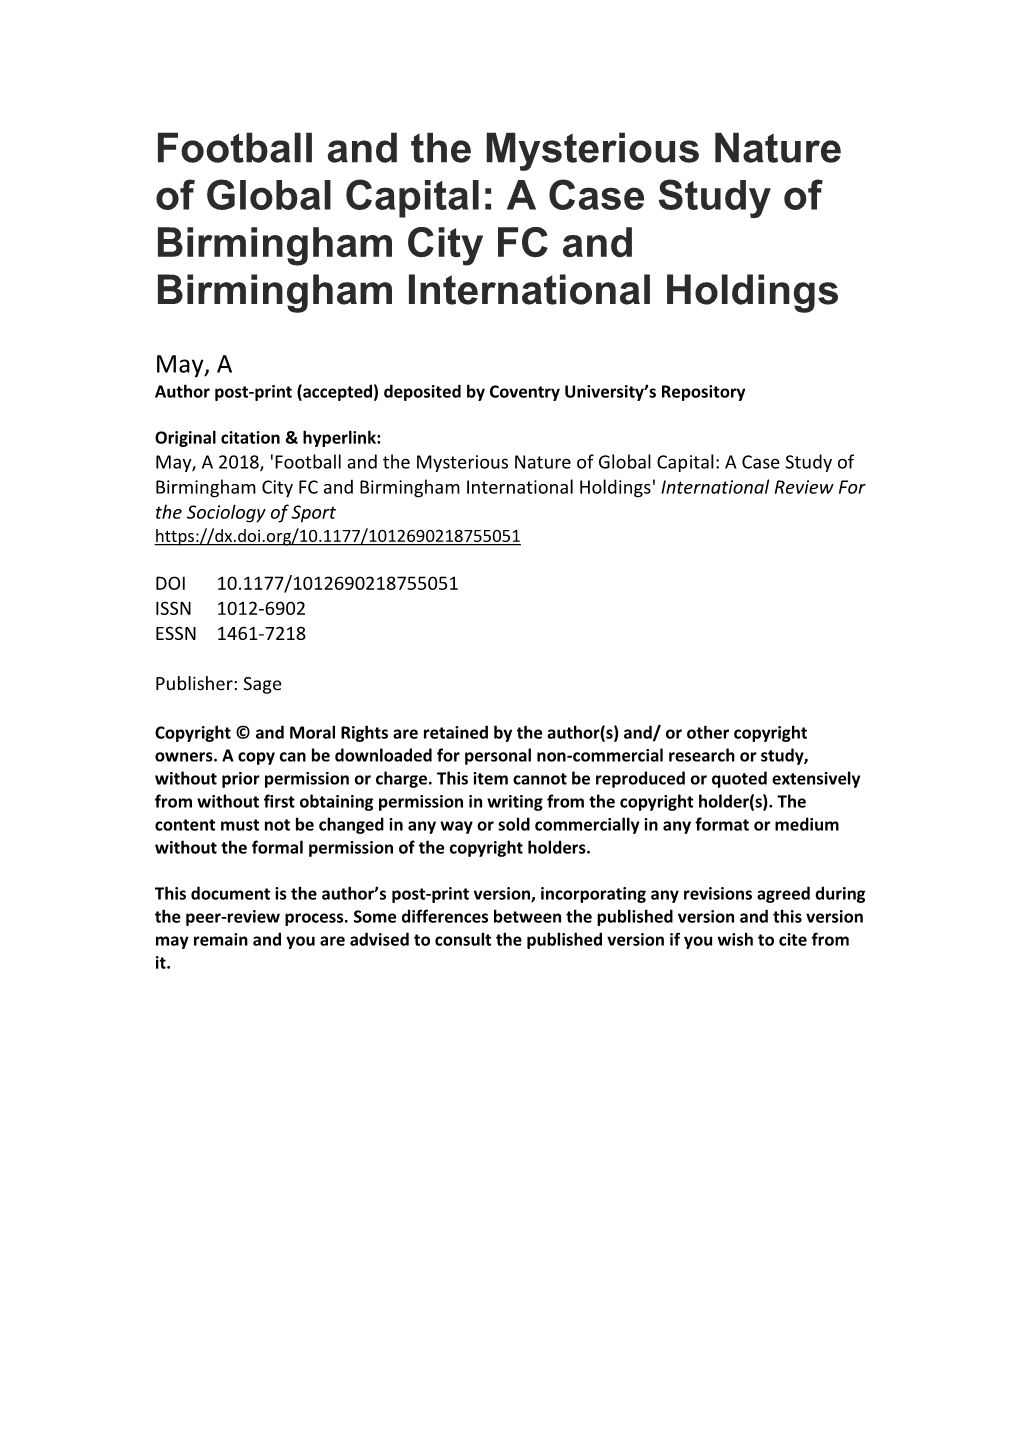 A Case Study of Birmingham City FC and Birmingham International Holdings